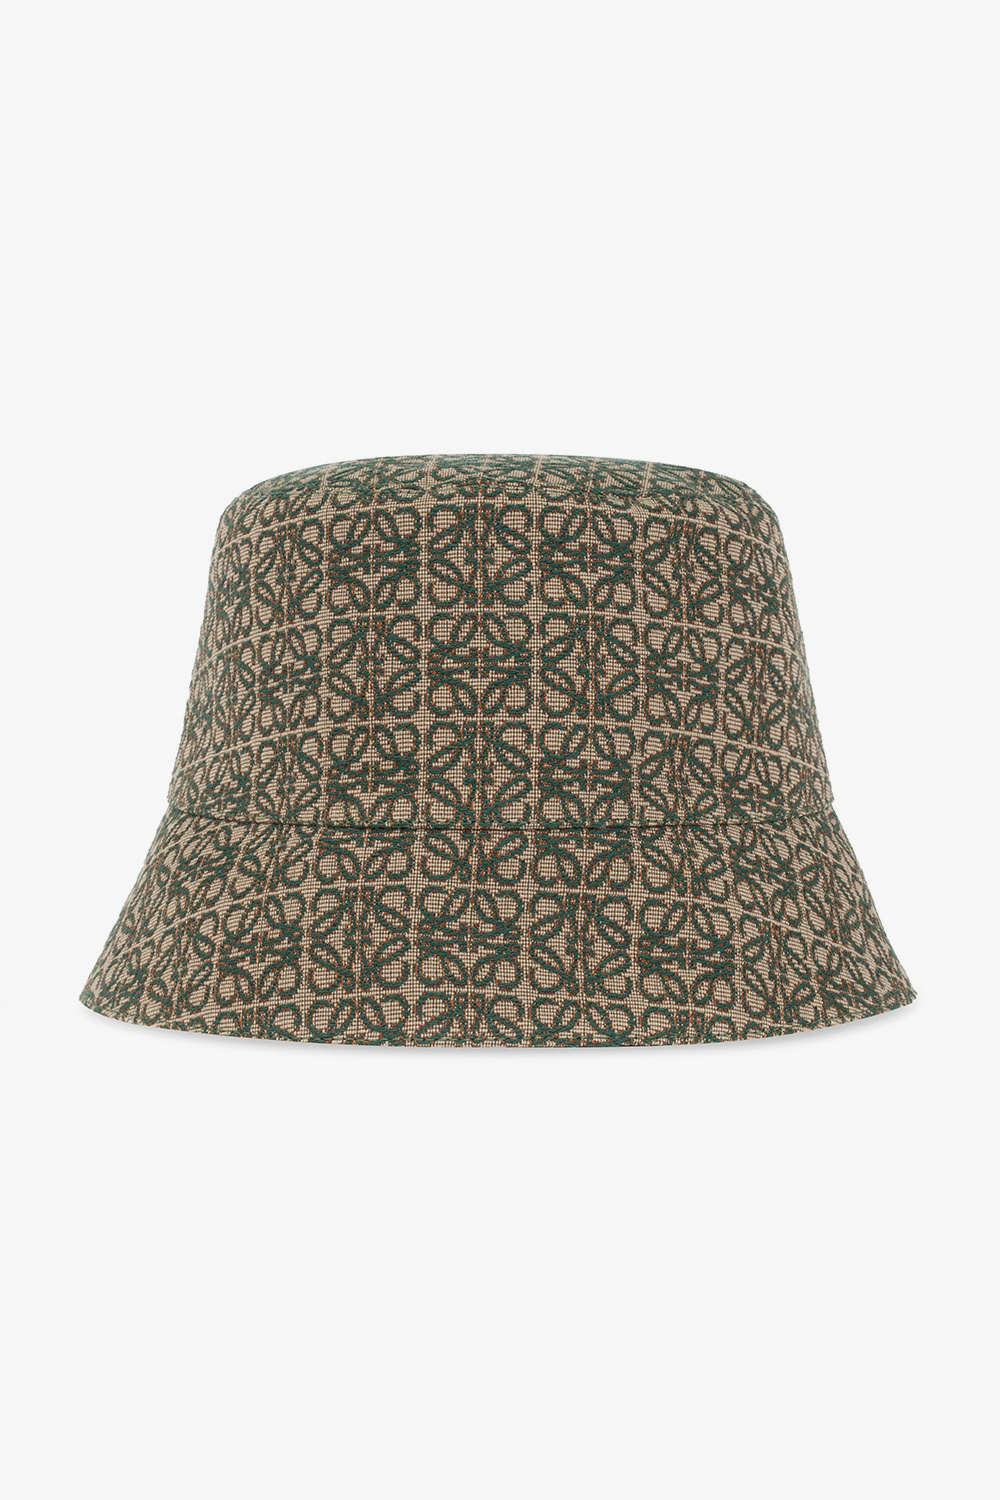 Loewe Jacquard bucket hat | Men's Accessories | Vitkac